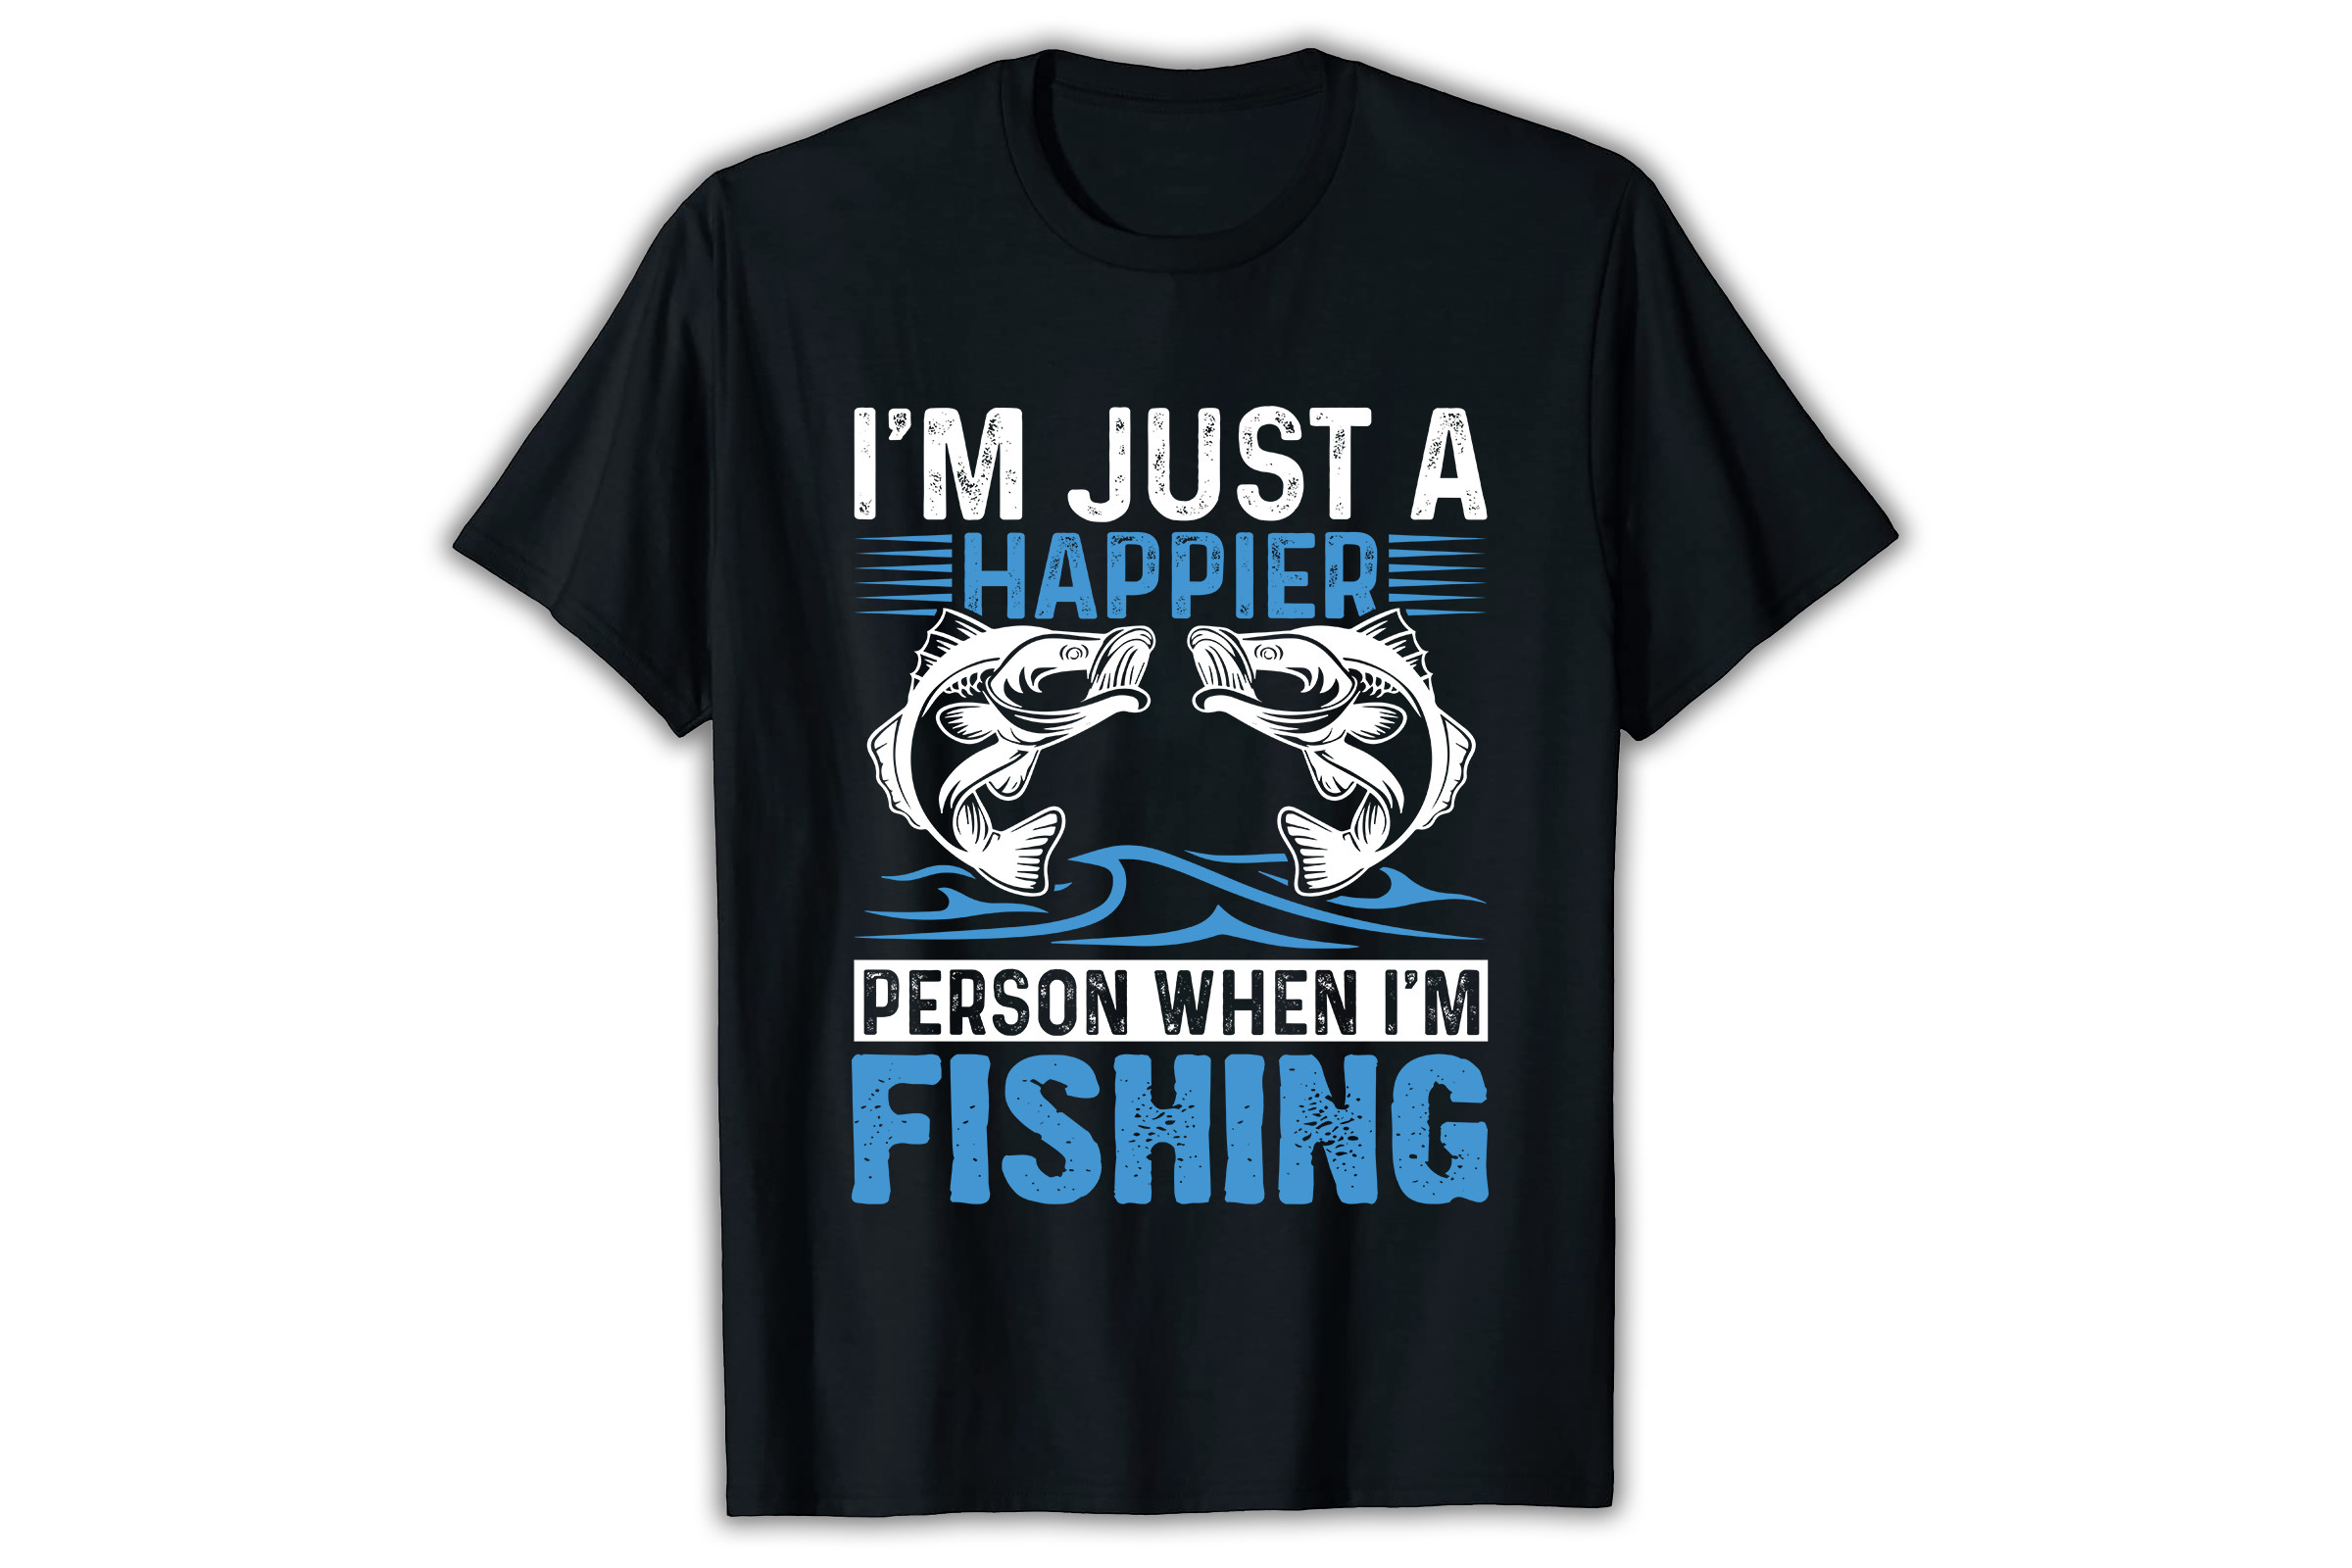 Fishing T Shirt Design Free Graphic by mrshimulislam · Creative Fabrica